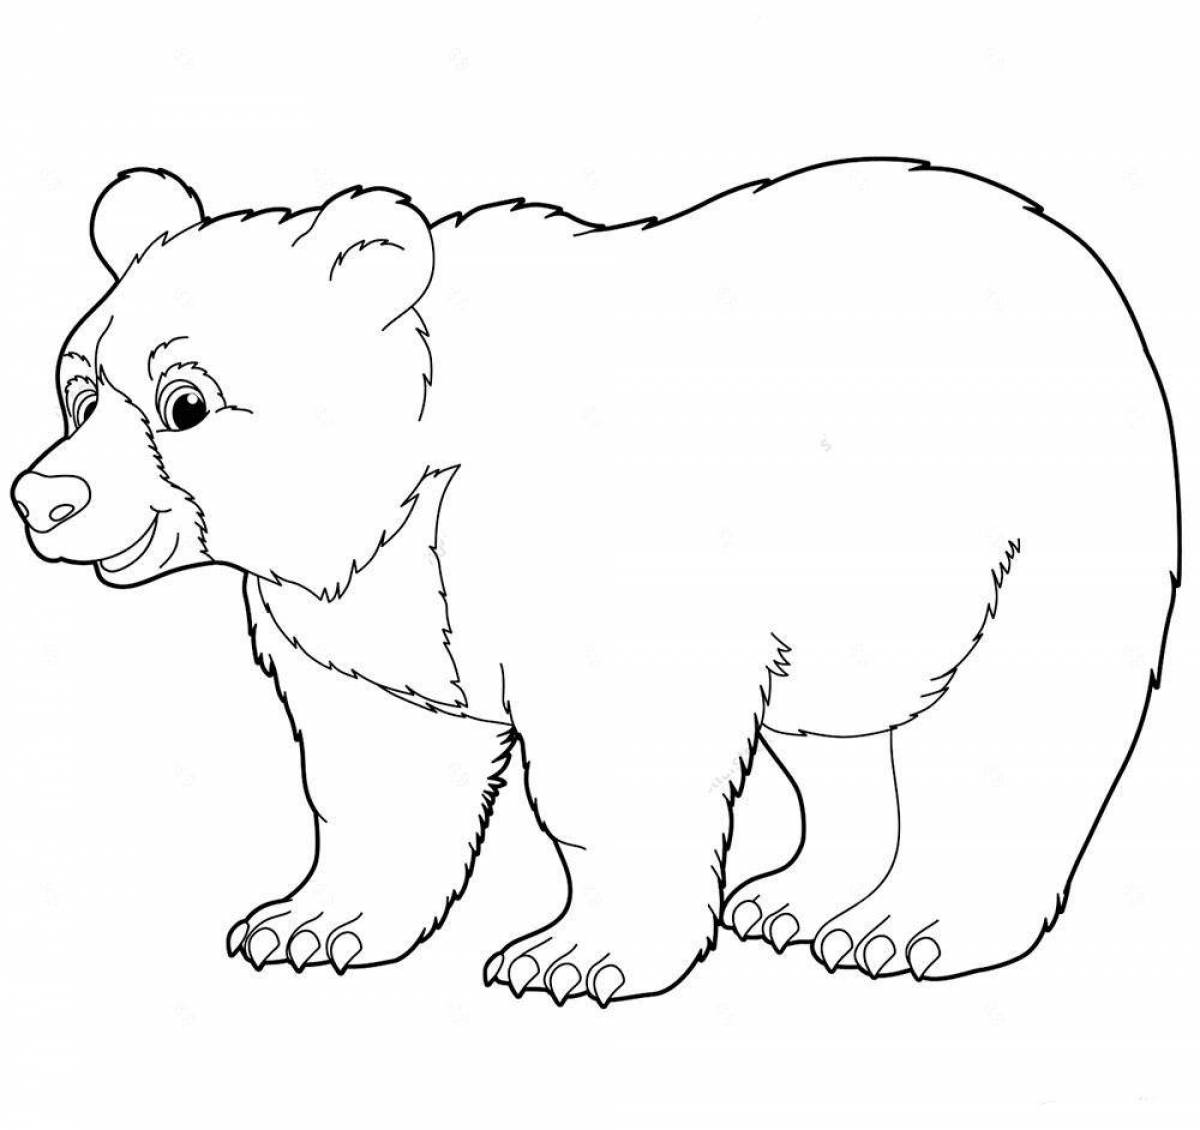 Colorful polar bear coloring book for preschoolers